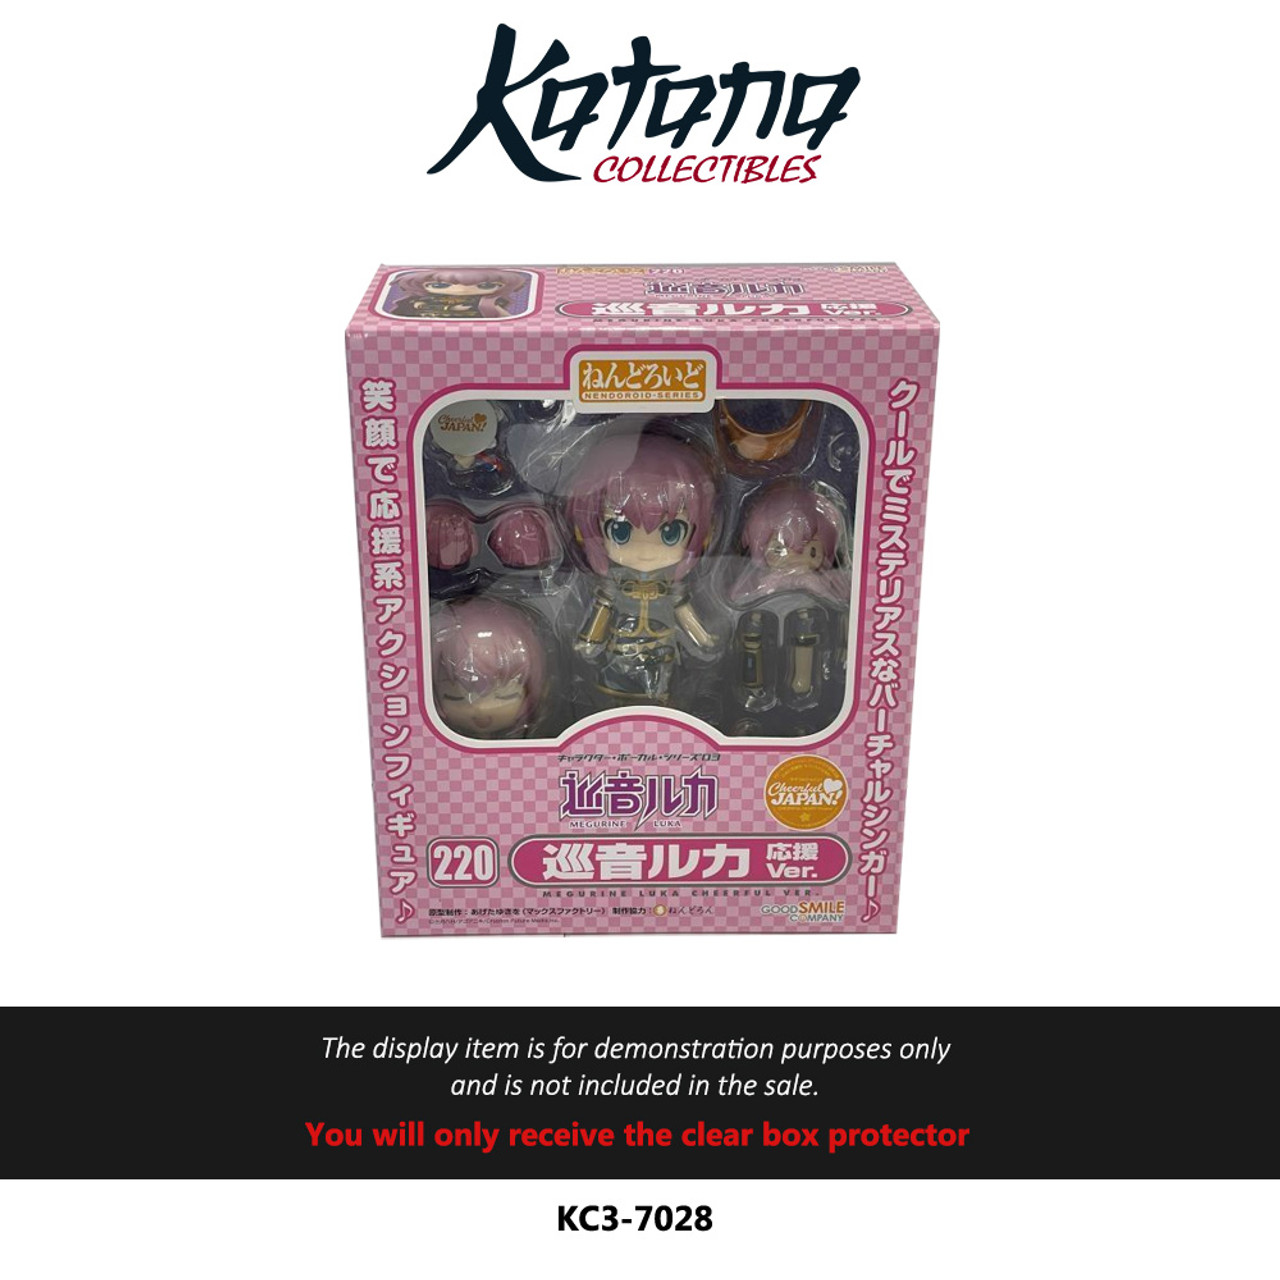 Katana Collectibles Protector For Nendoroid Vocaloid Megurine Luka Cheerful Japan! 220